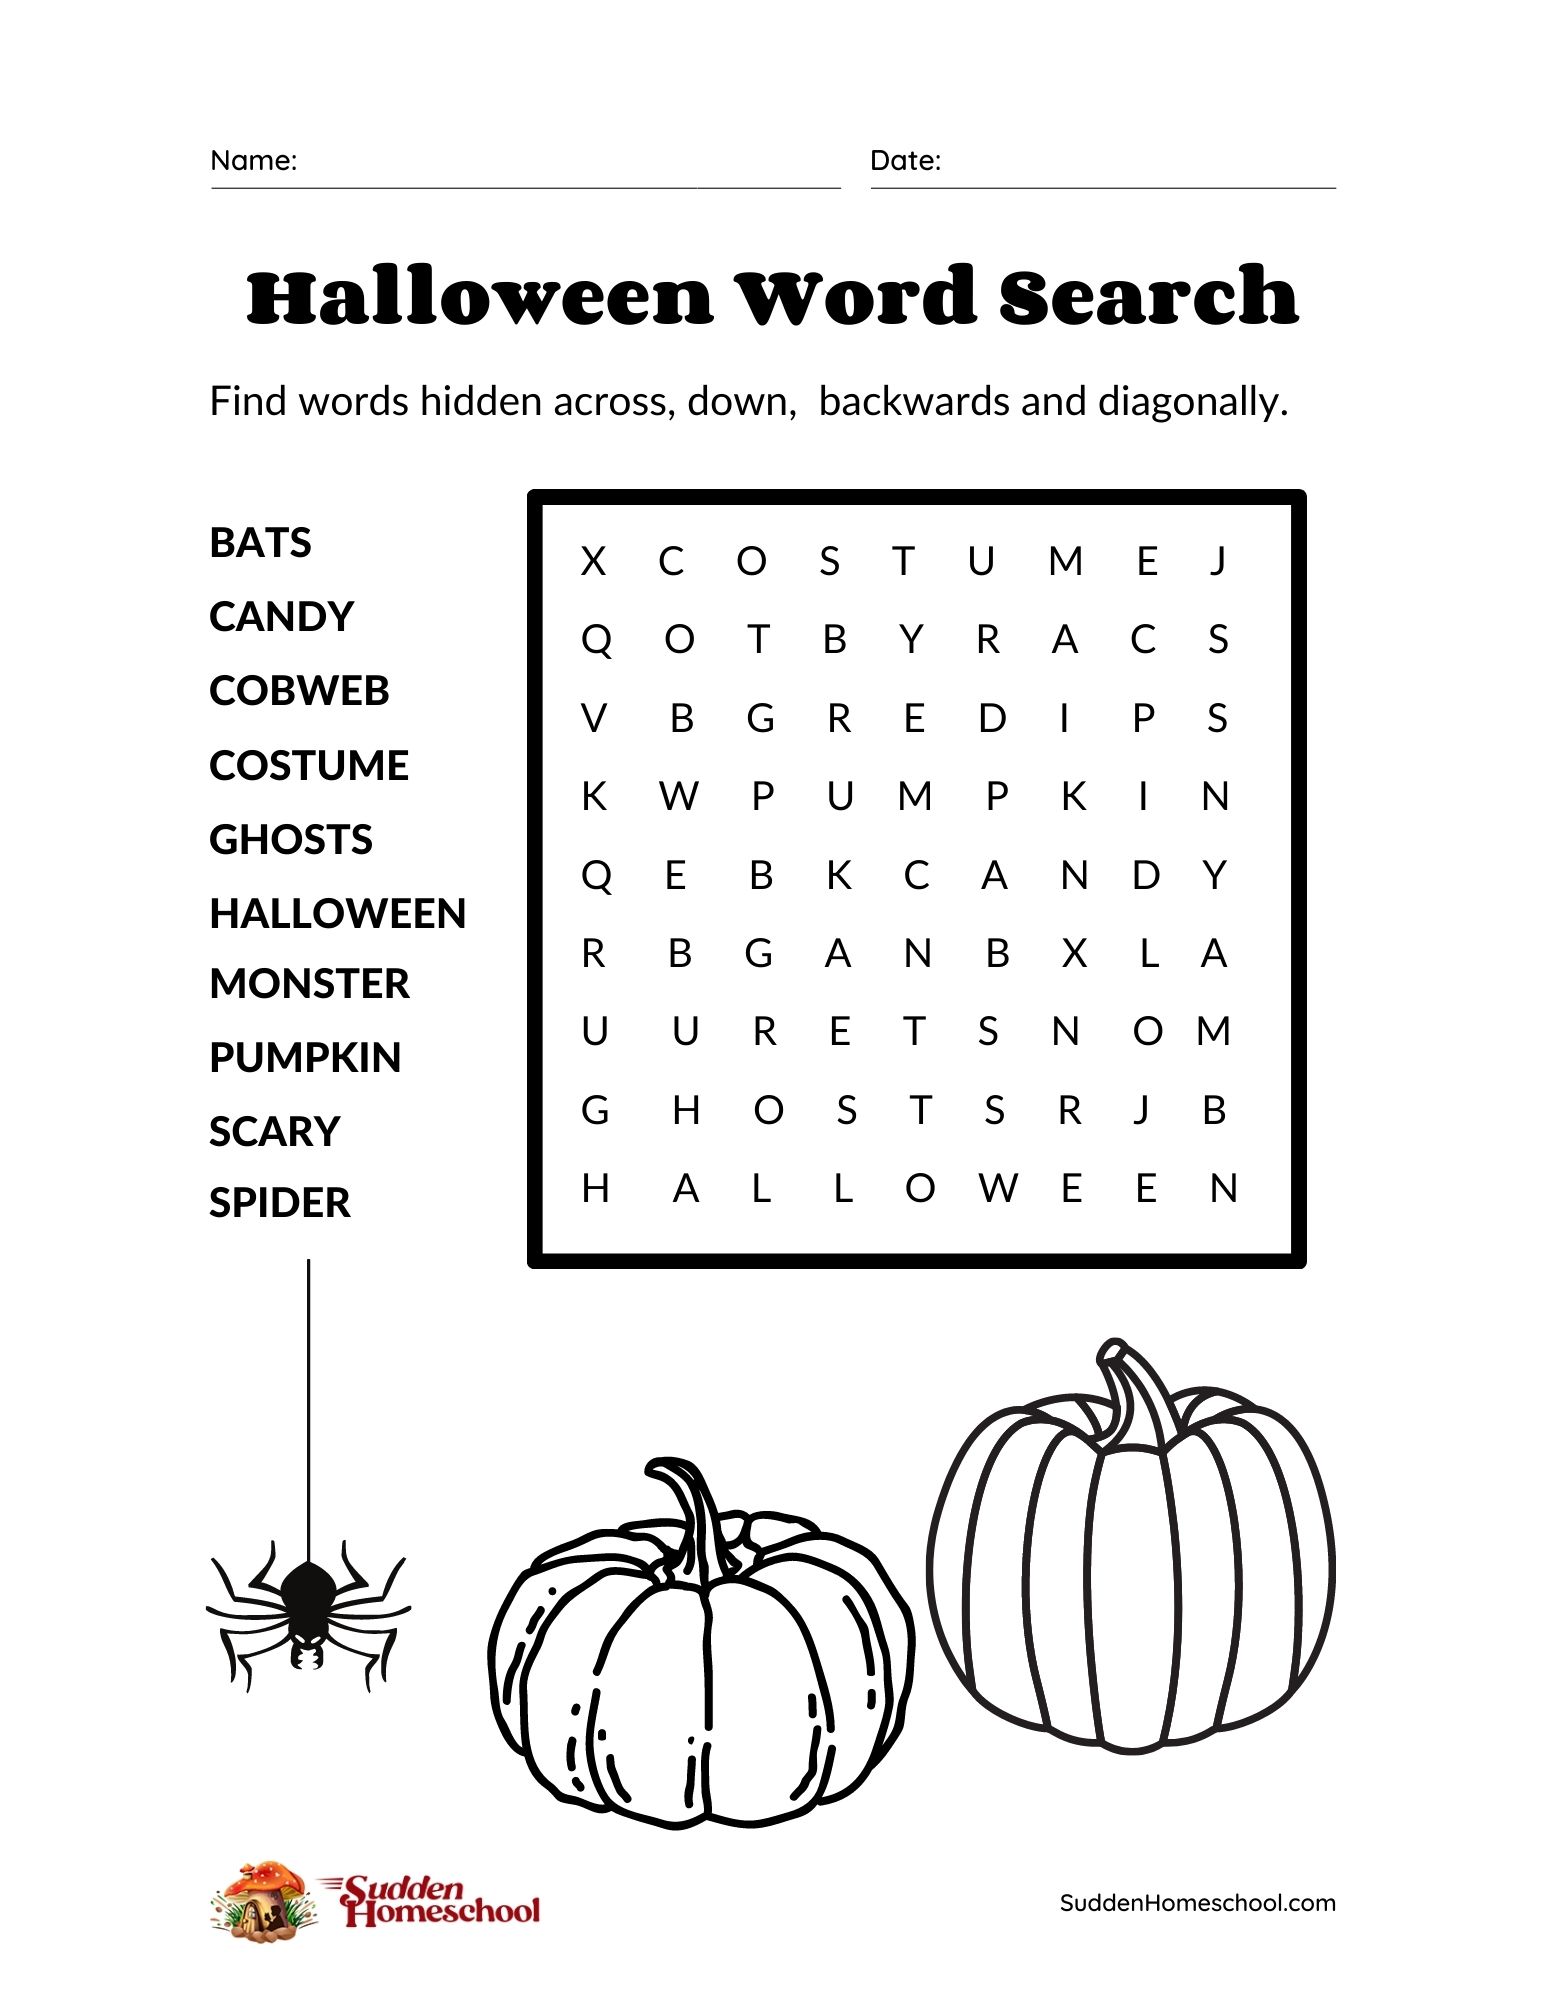 Halloween Word Search (Printable) - Sudden Homeschool